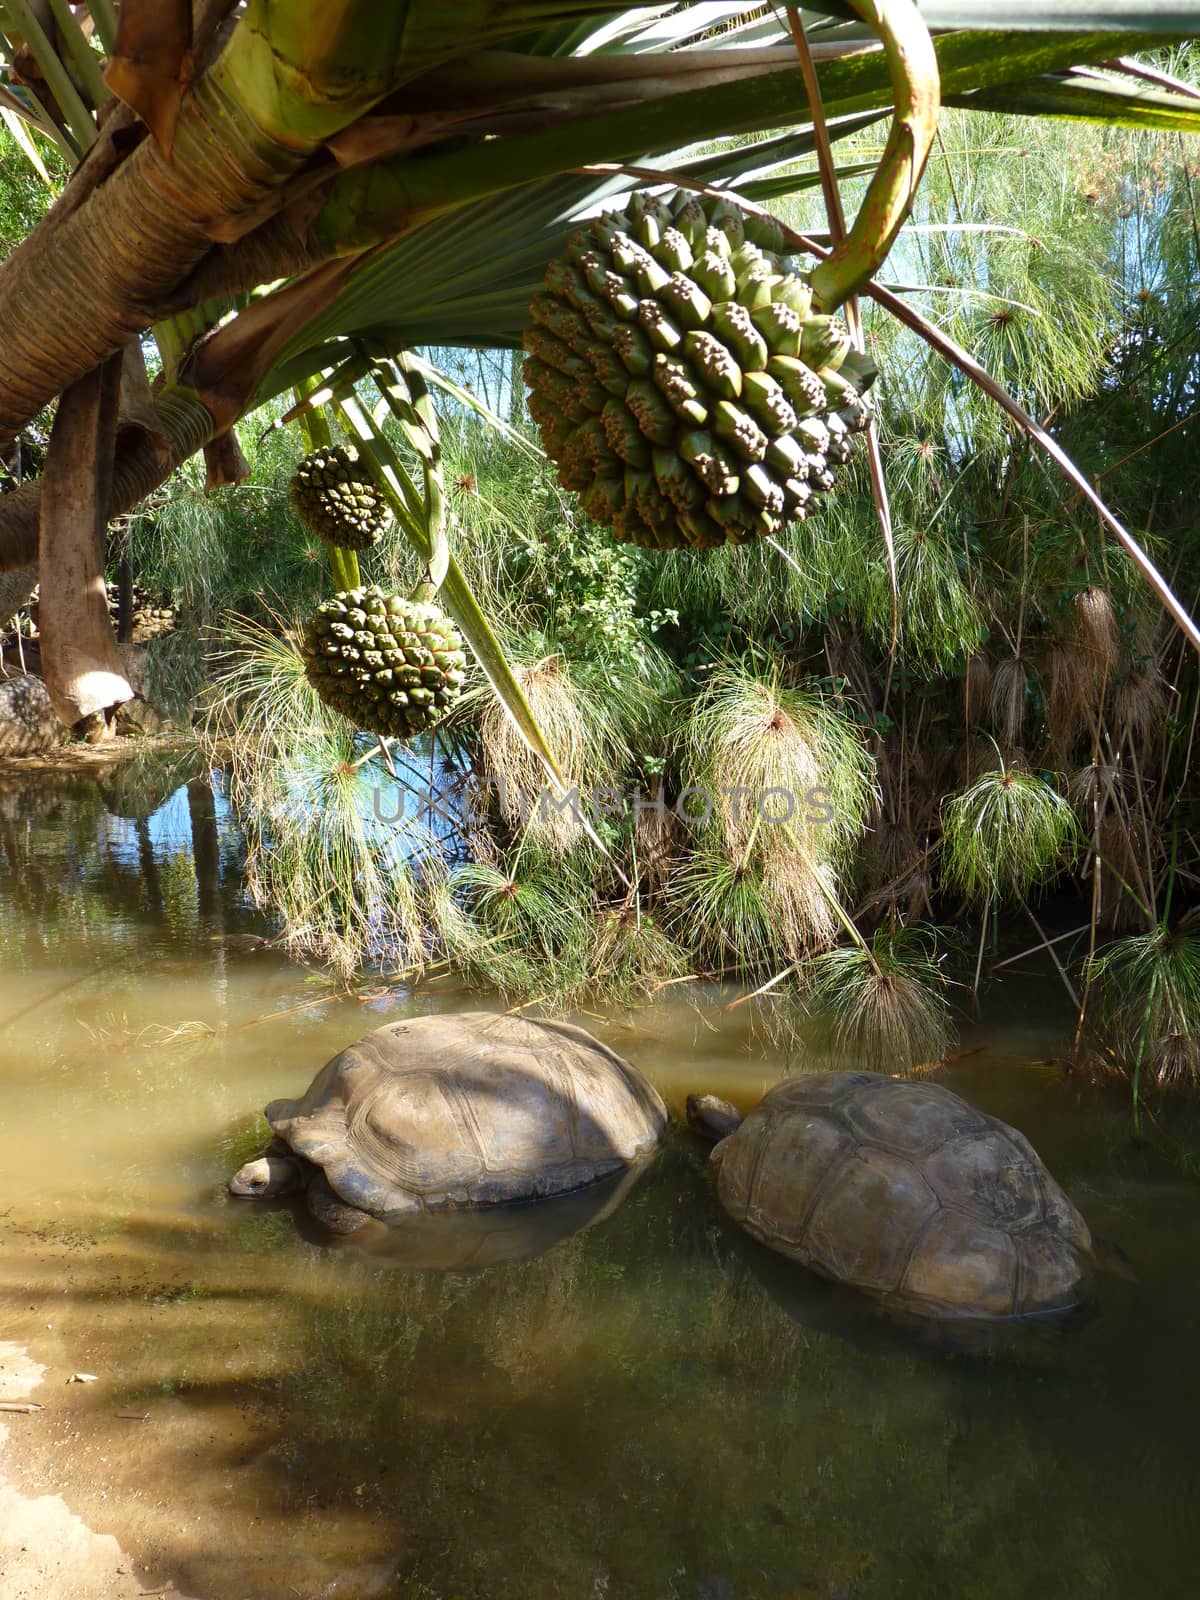 Giant Turtles by nicousnake